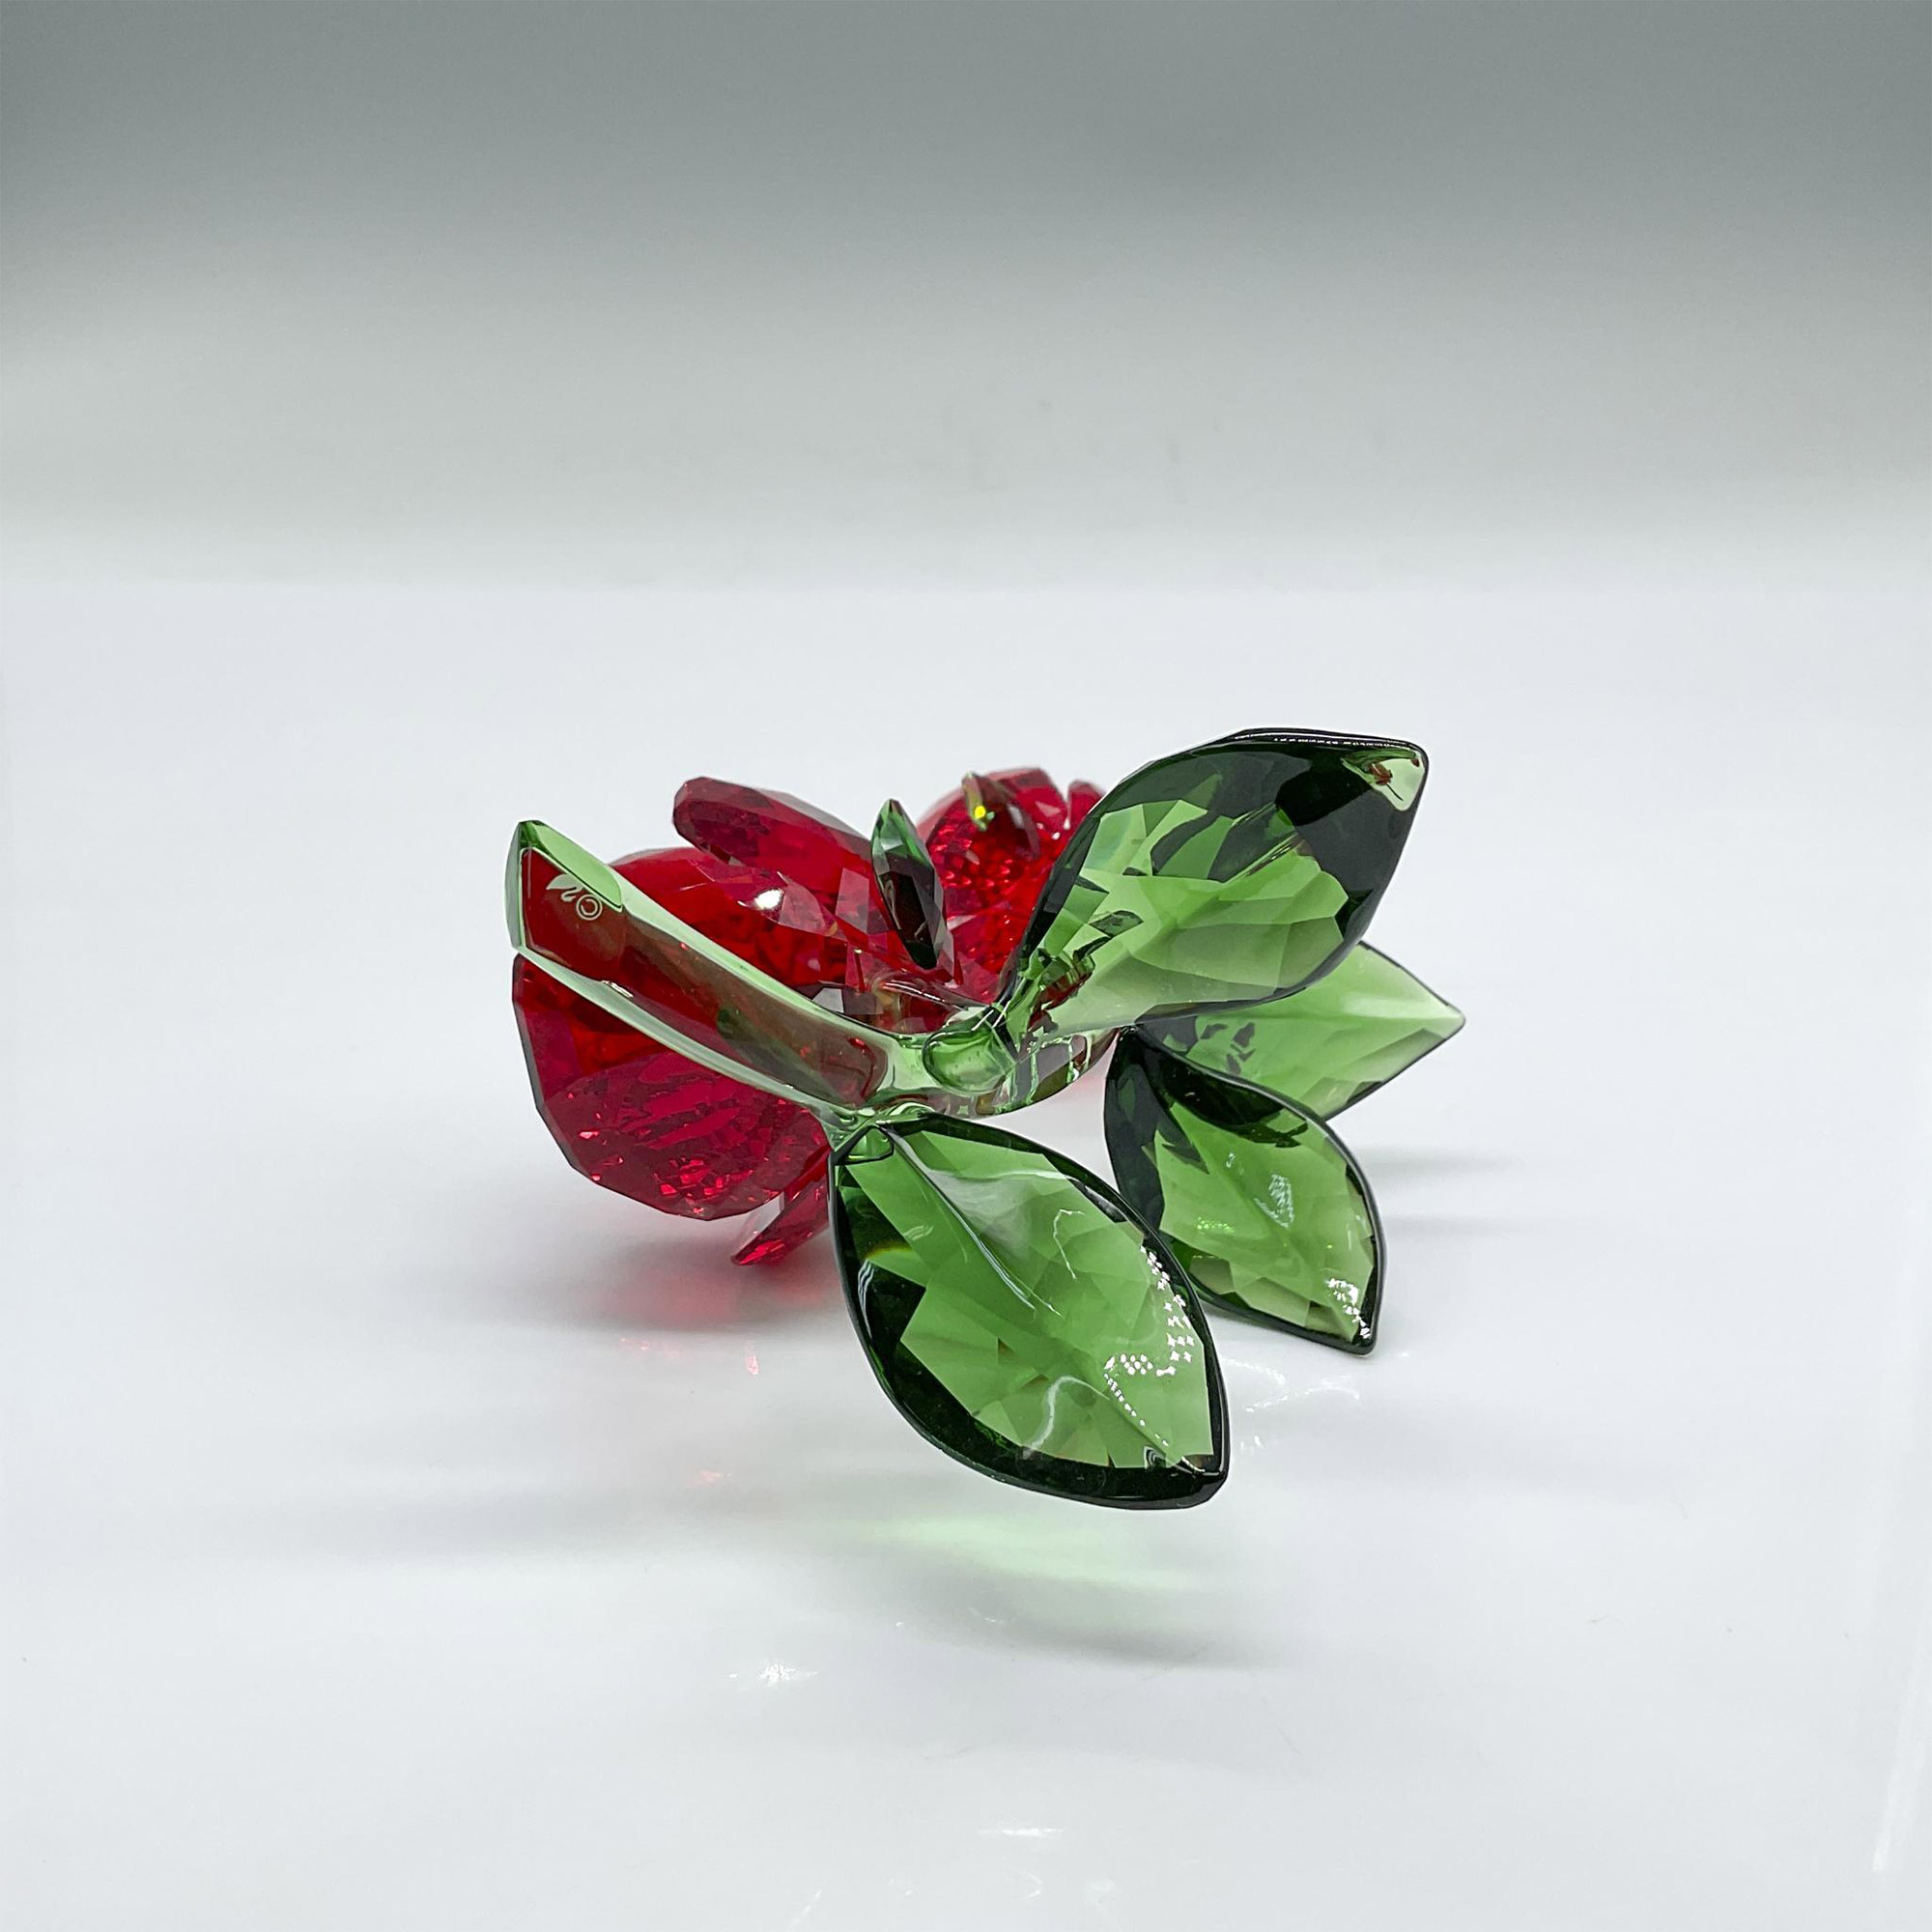 Swarovski Crystal Figurine, Red Rose - Image 3 of 4